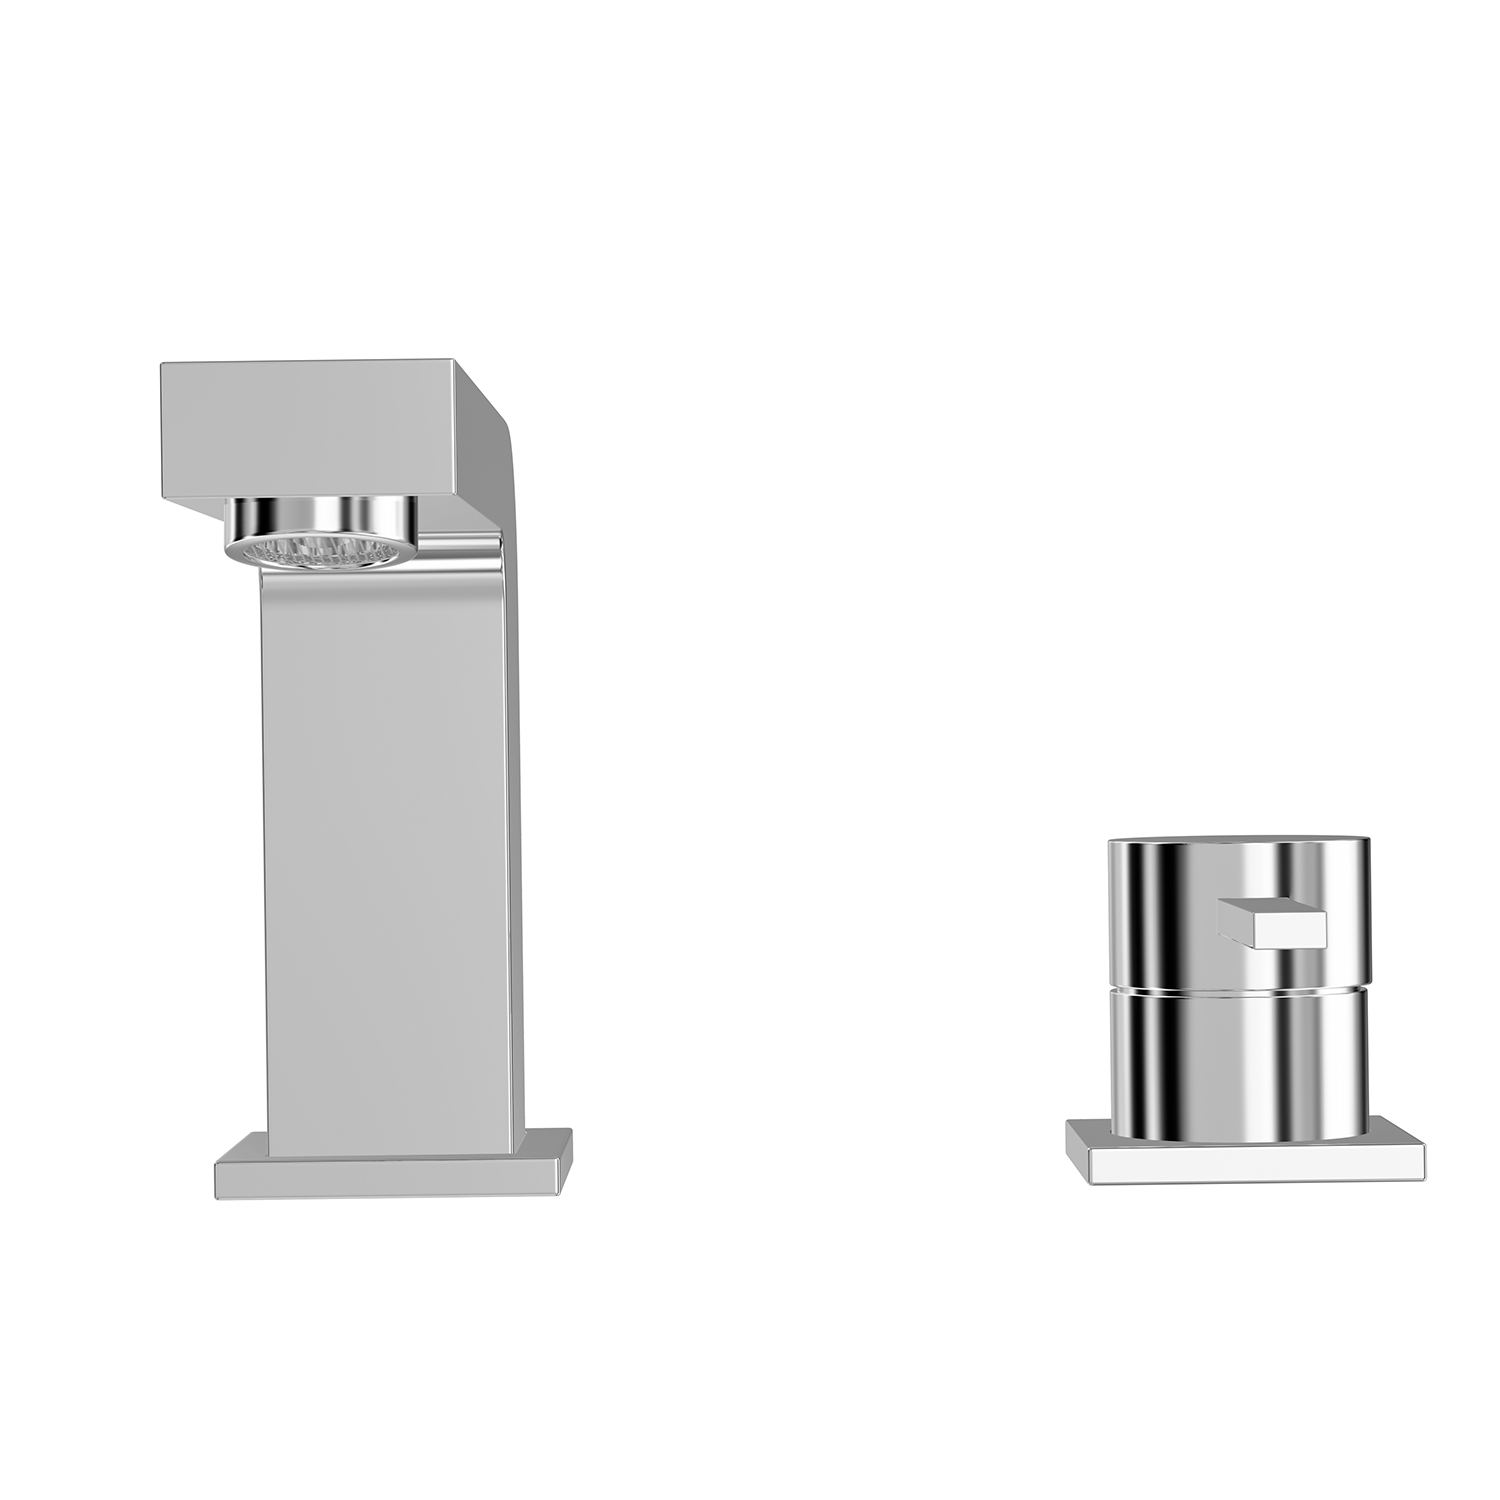 DAX Single Handle Bathroom Faucet, Brass Body, Chrome Finish, 7-1/2 x 5-1/2 Inches (DAX-8127)